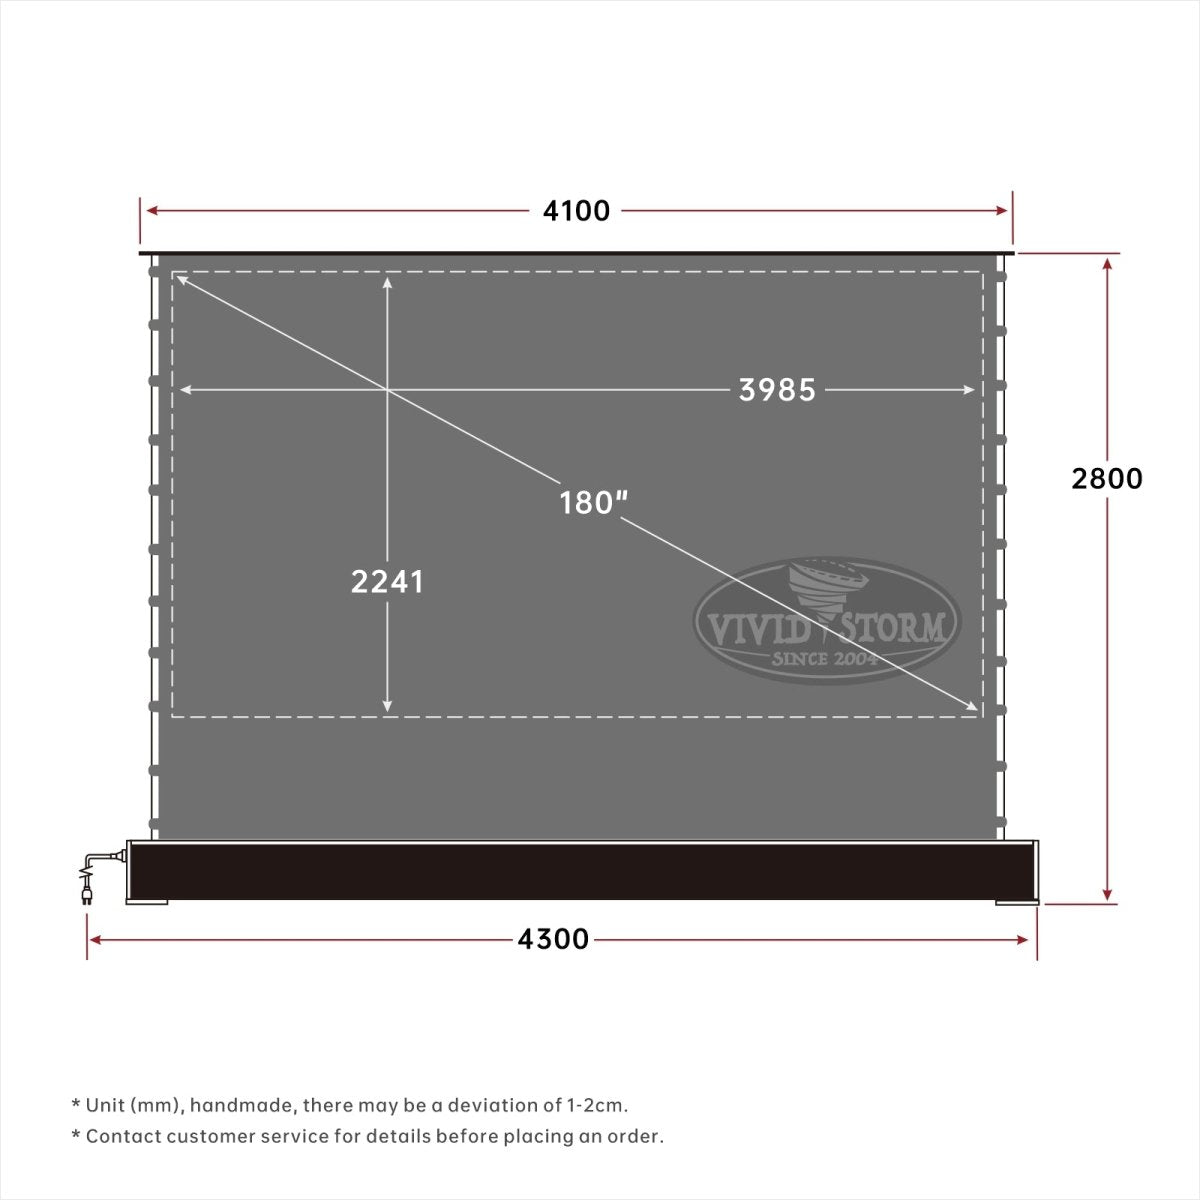 VIVIDSTORM TITAN Motorized Tension Floor Rising Projector screen-Giant size screen 160inch to 200inch - VIVIDSTORM